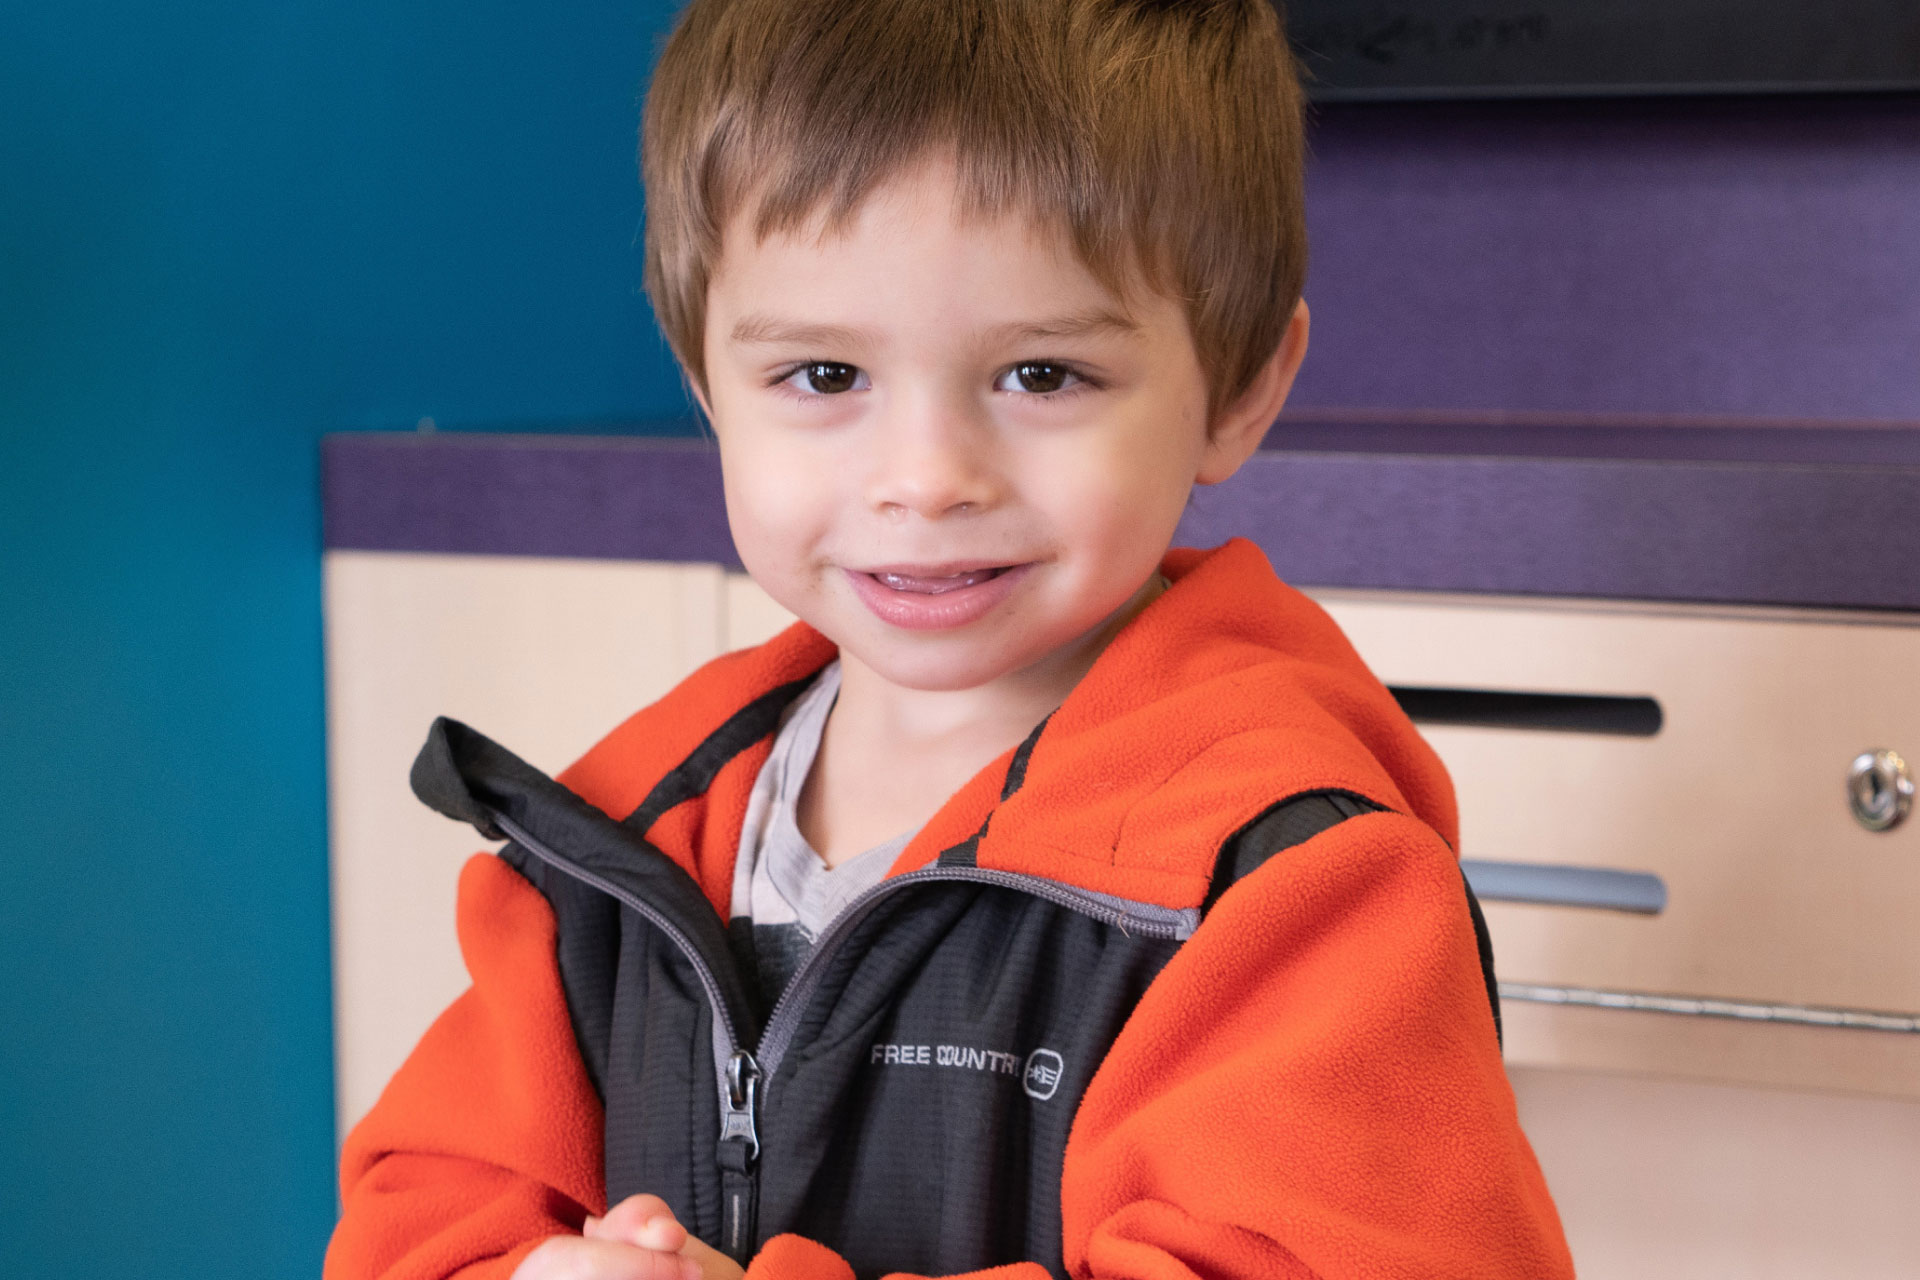 little boy wearing orange and black jacket smiling at camera